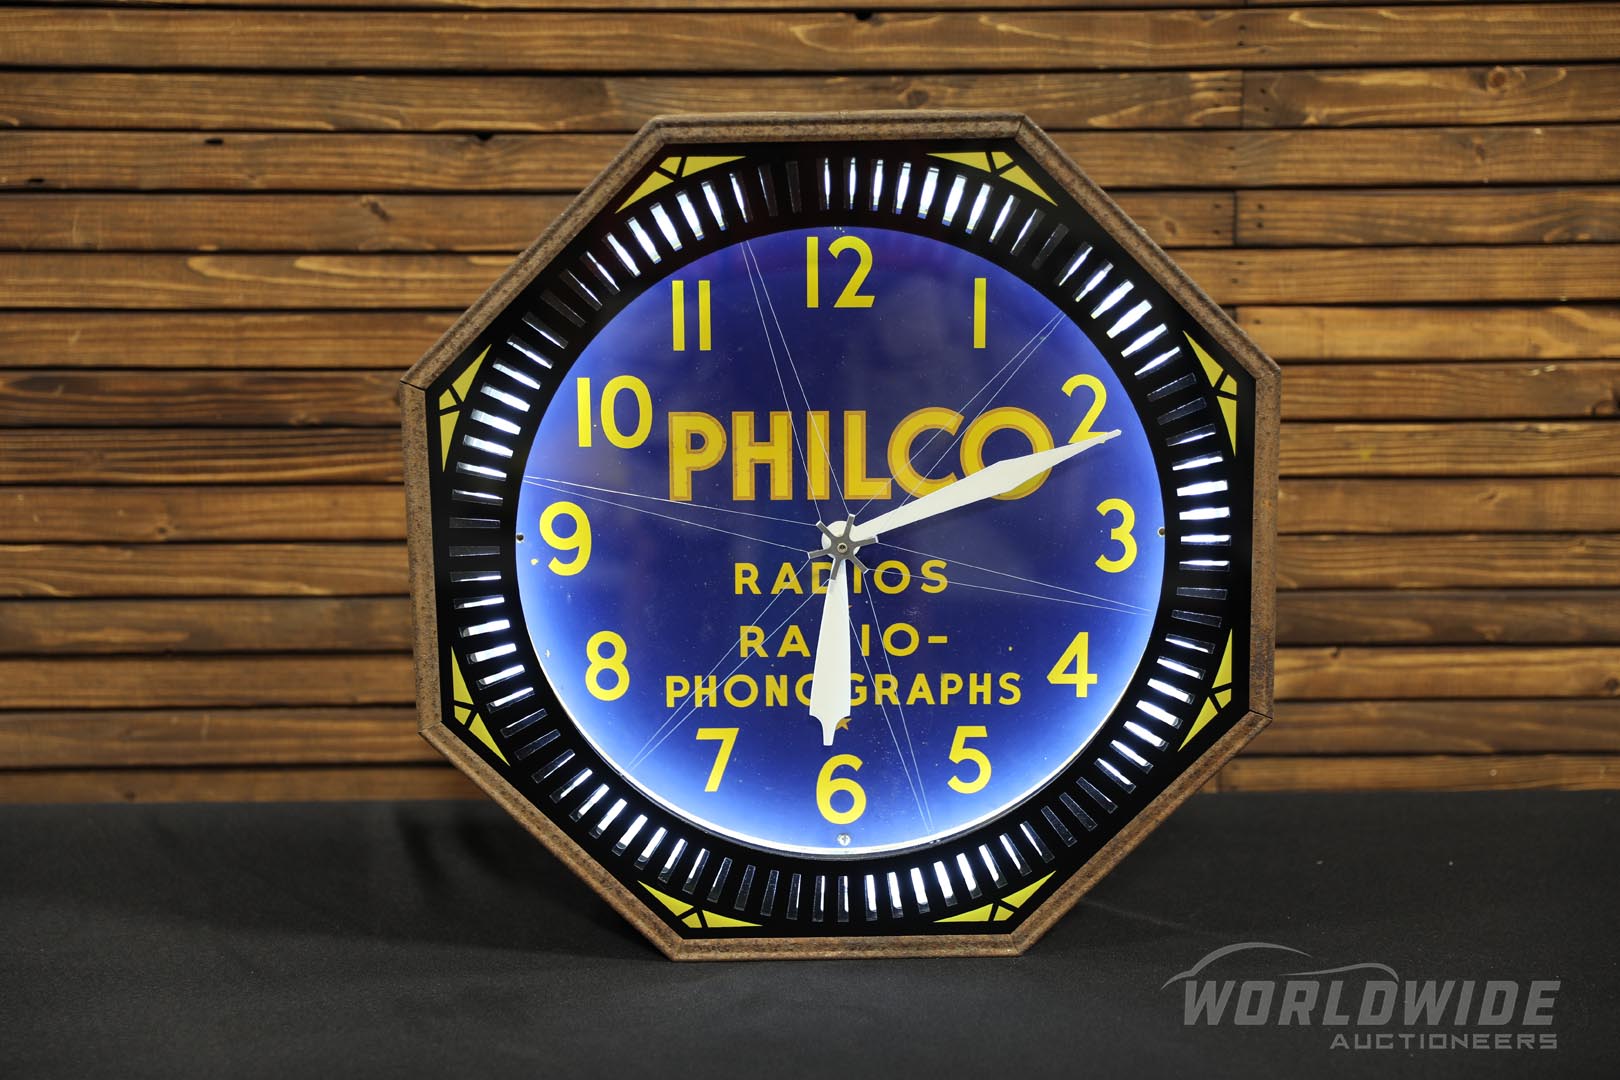 Philco Radios and Radio-Phonographs Octagon Neon Clock